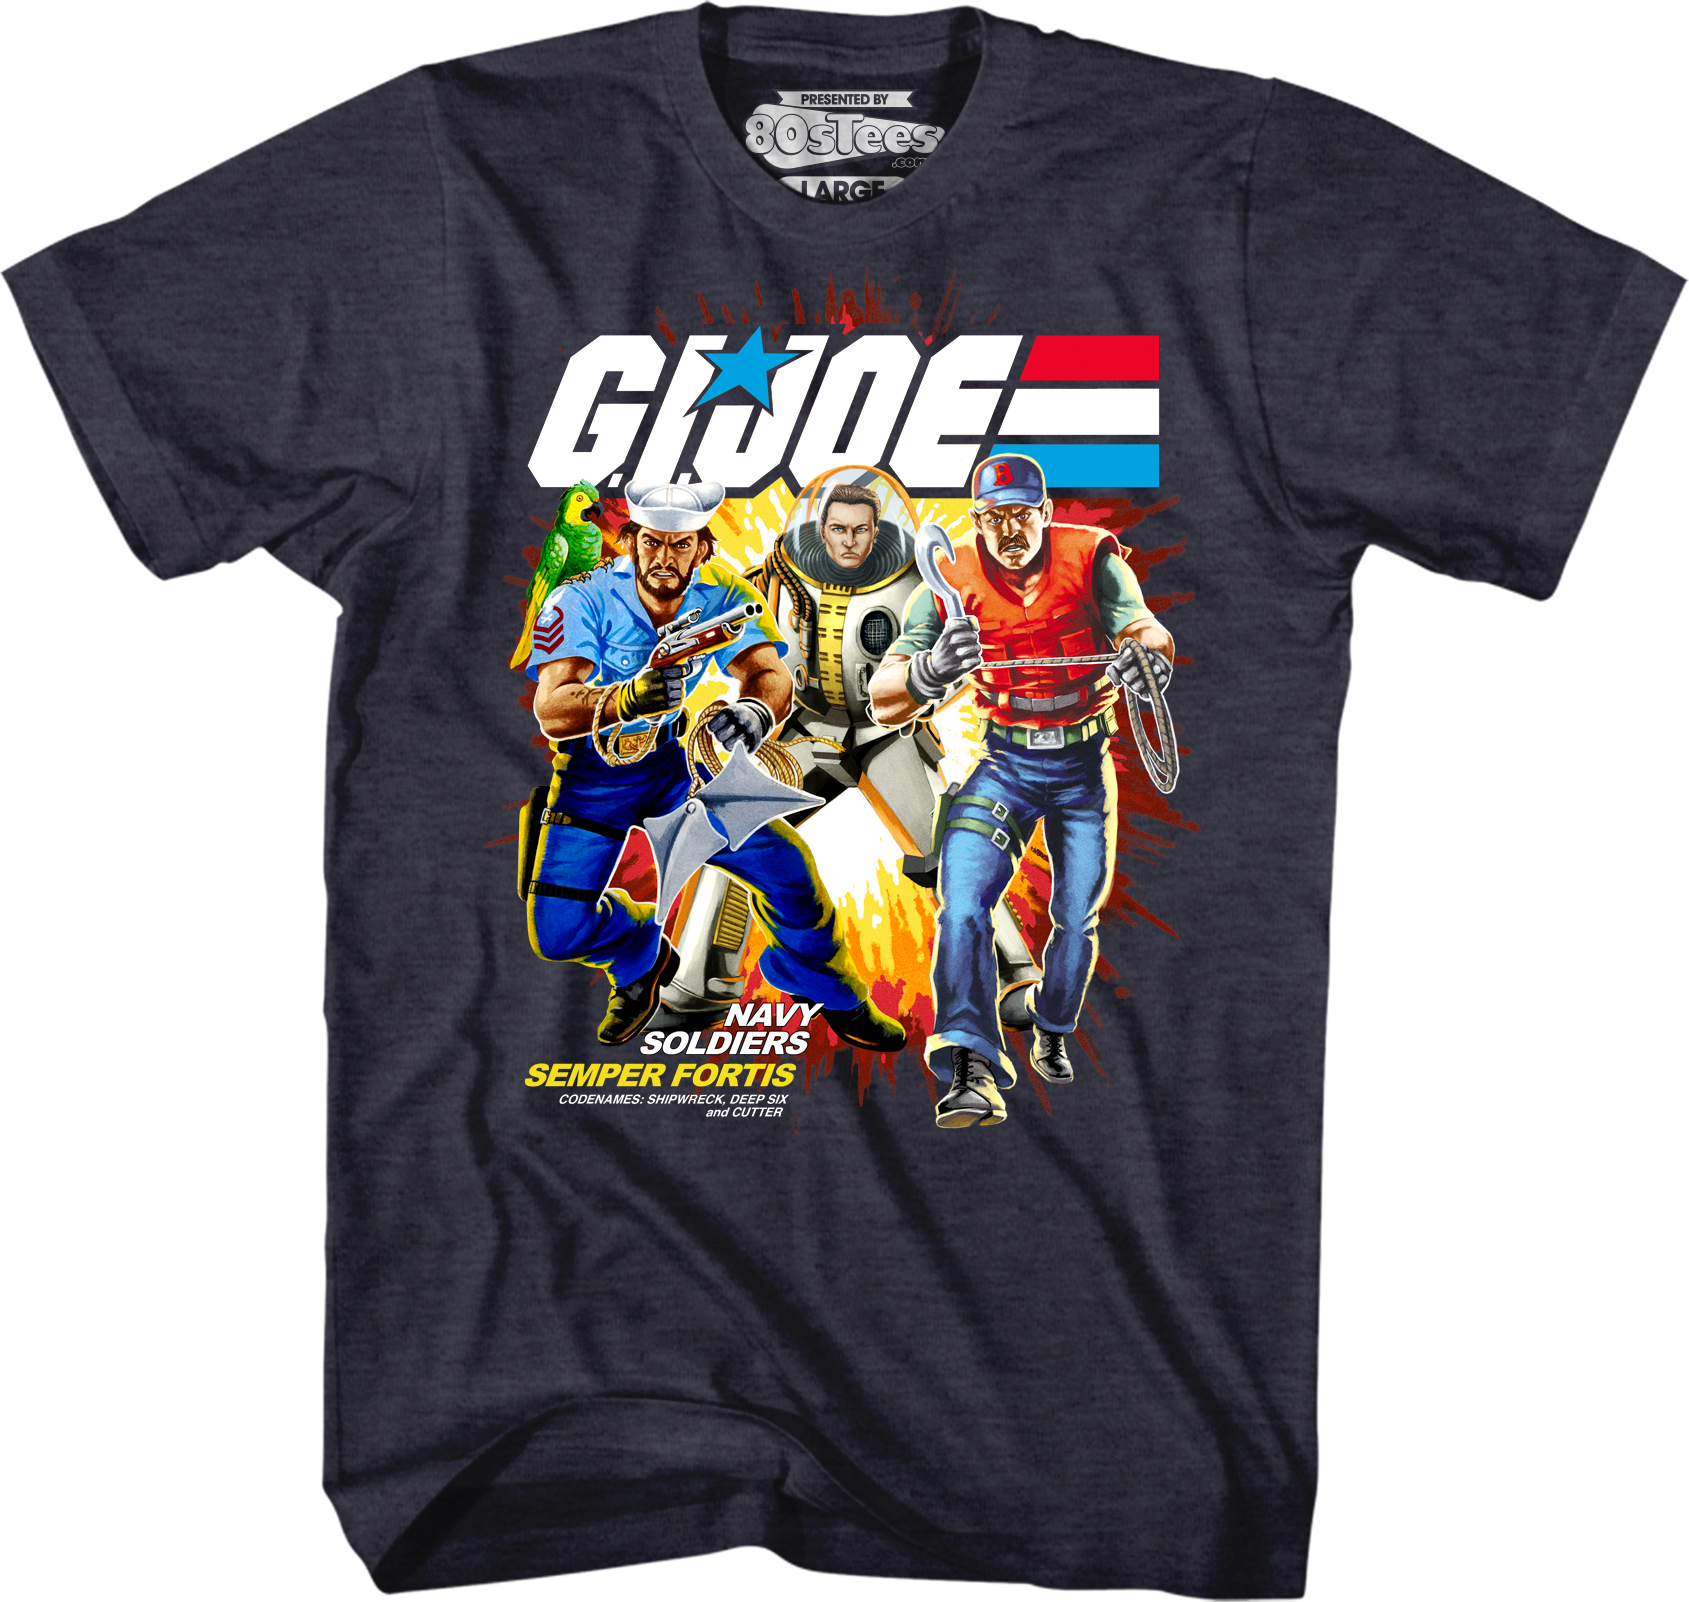 Navy Soldiers GI Joe T-Shirt